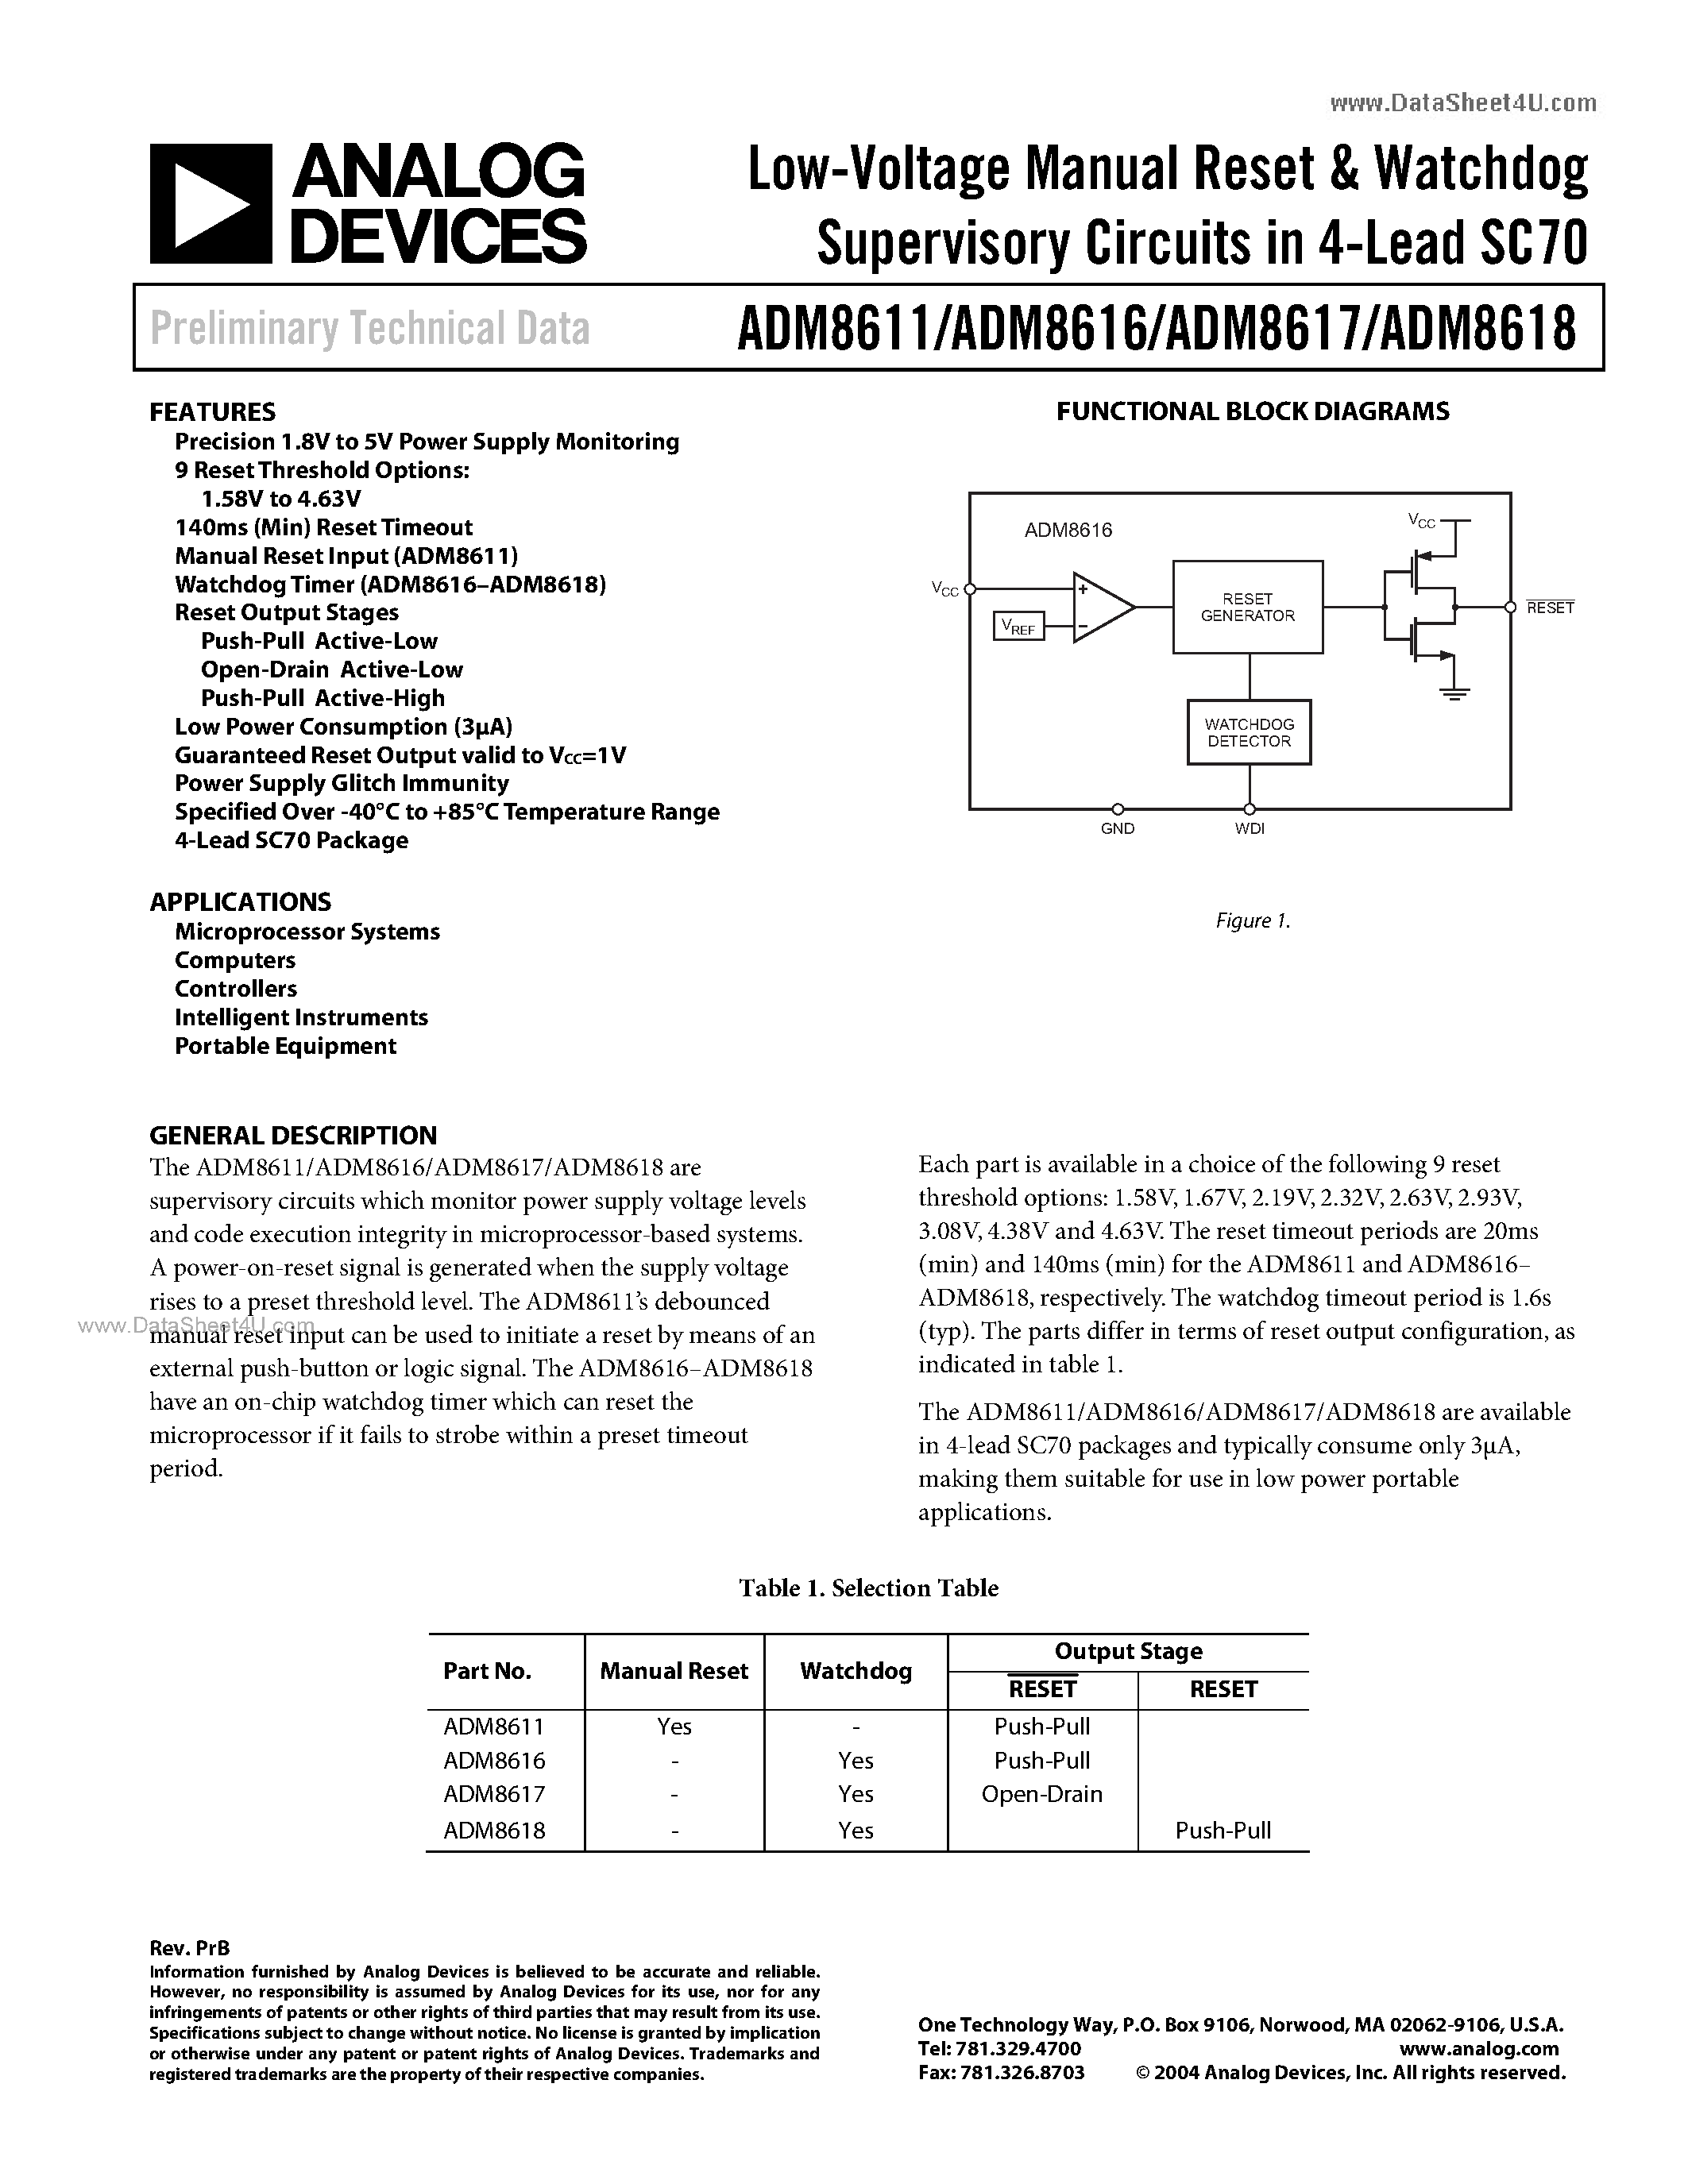 Даташит ADM8611 - (ADM8611 - ADM8618) Low-Voltage Manual Reset & Watchdog Supervisory Circuits страница 1